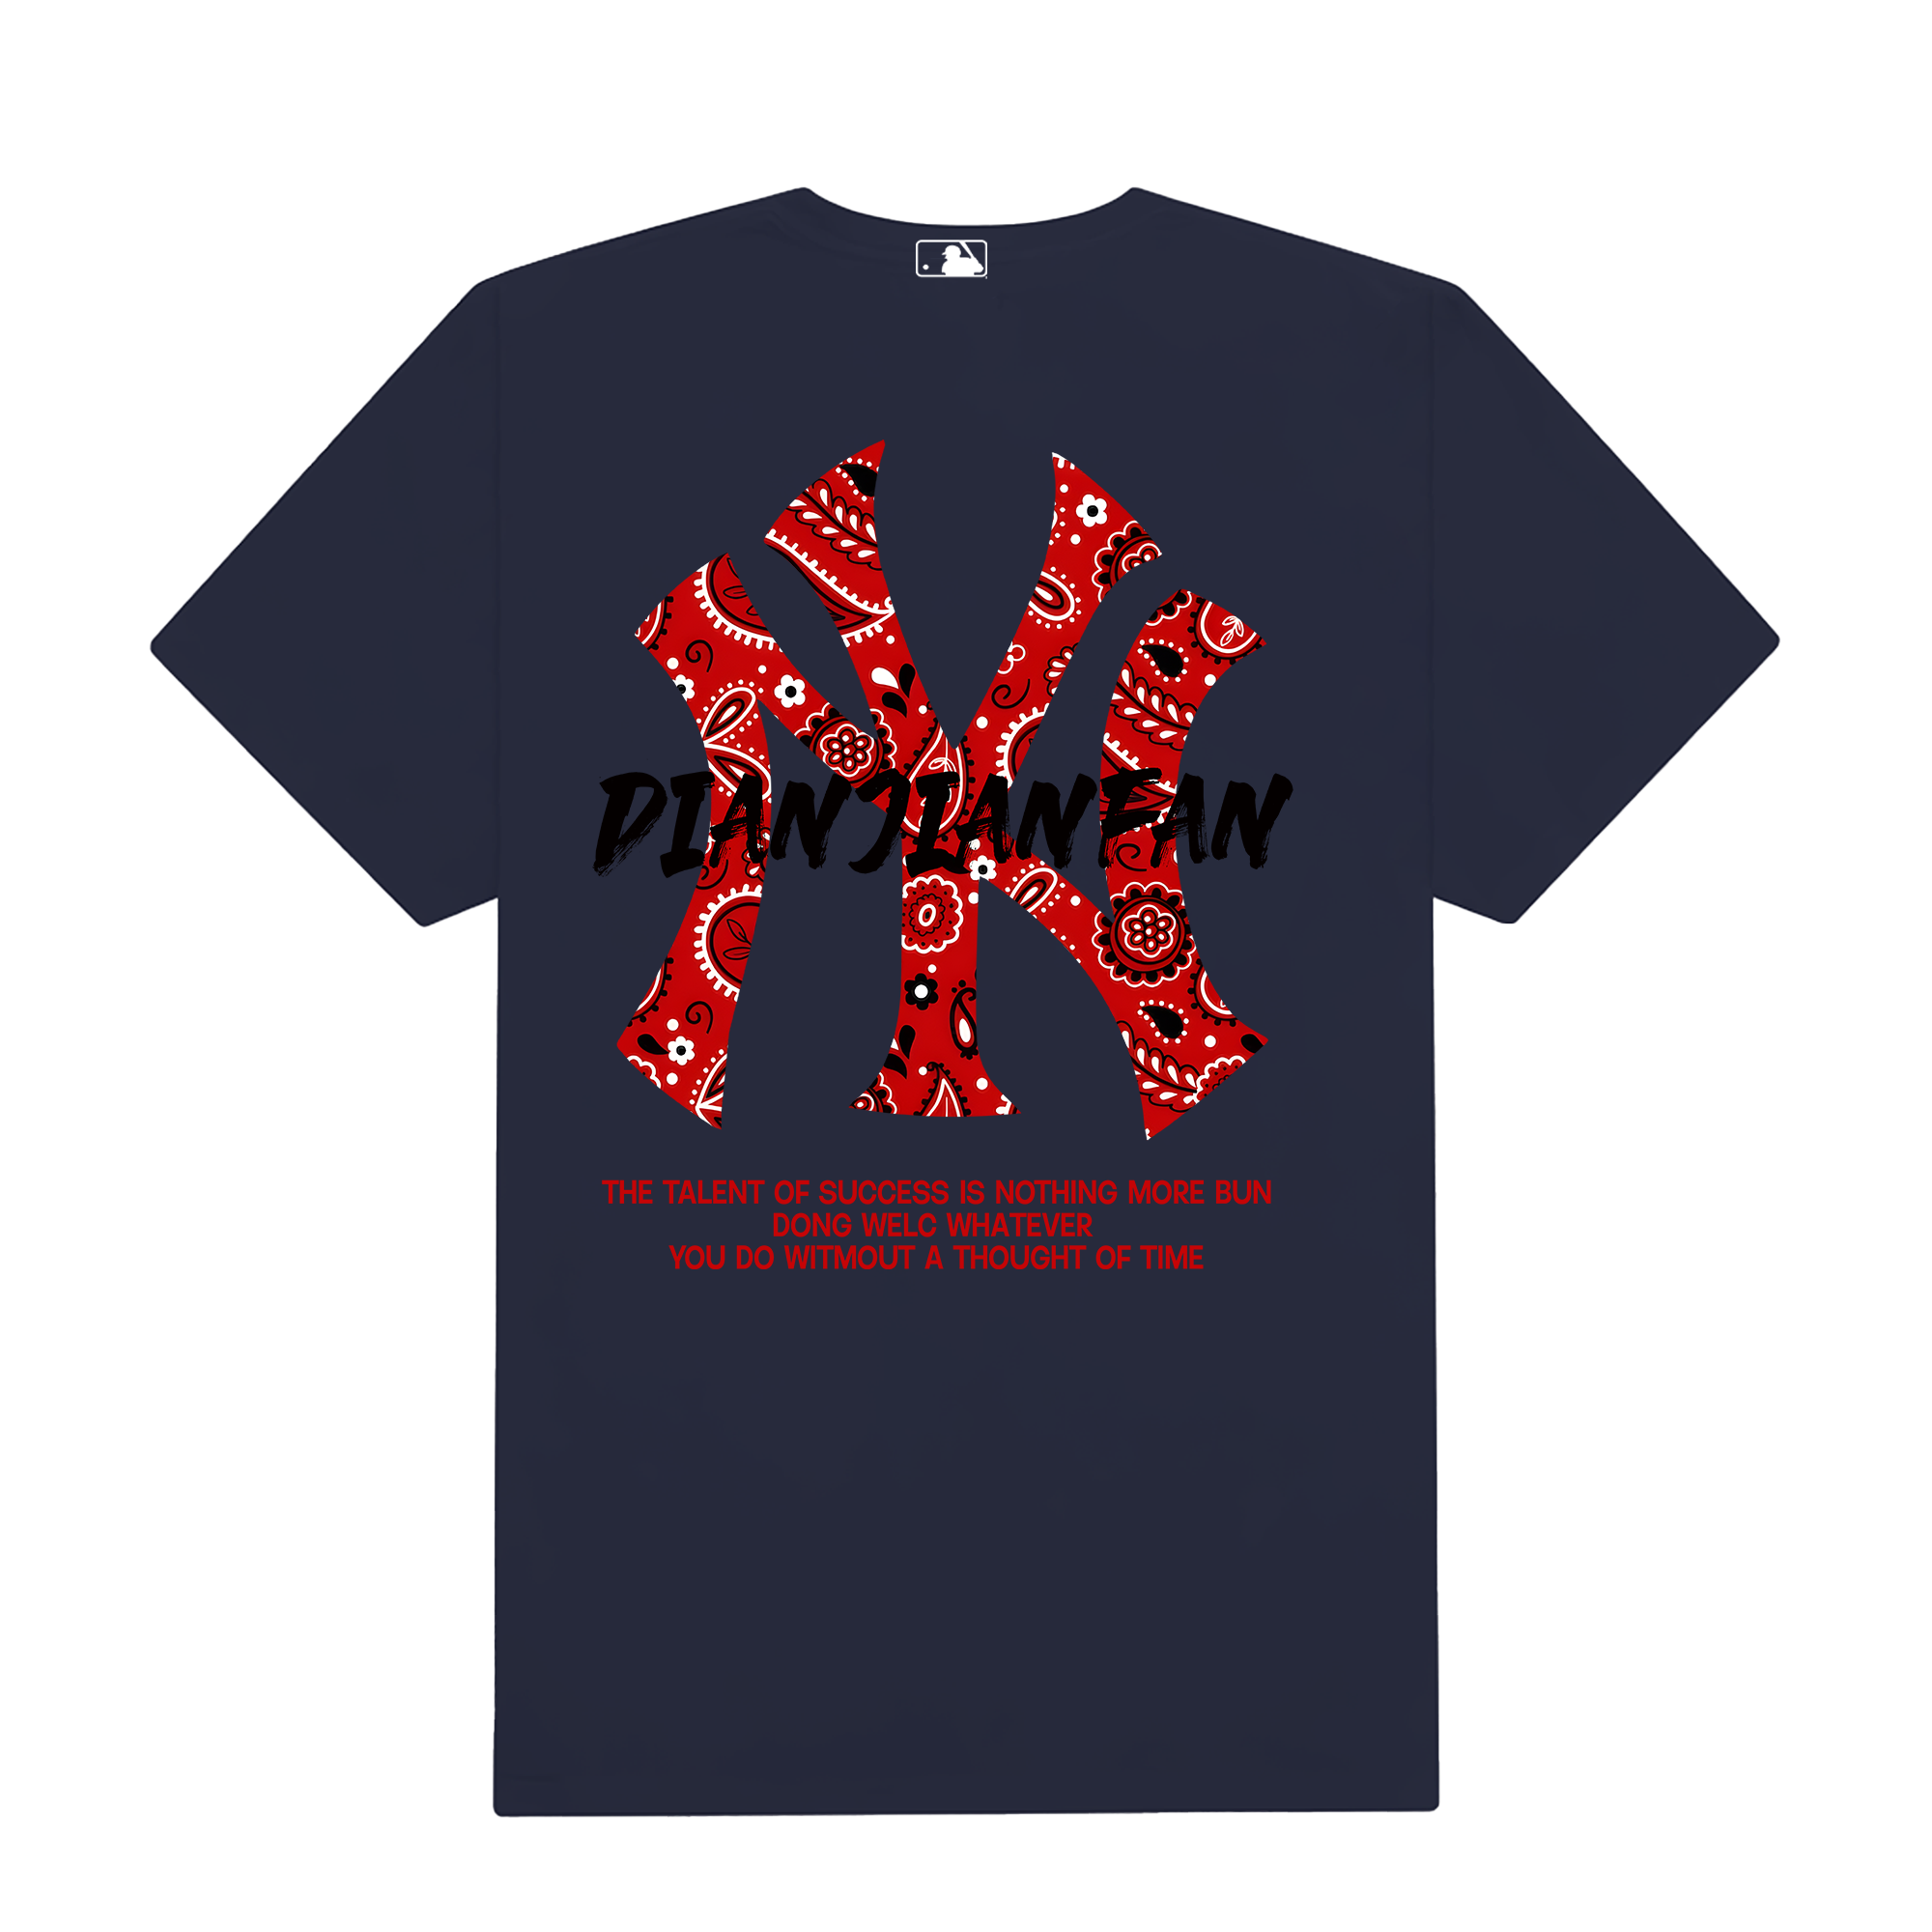 MLB Floral Red Dianjianfan T-Shirt